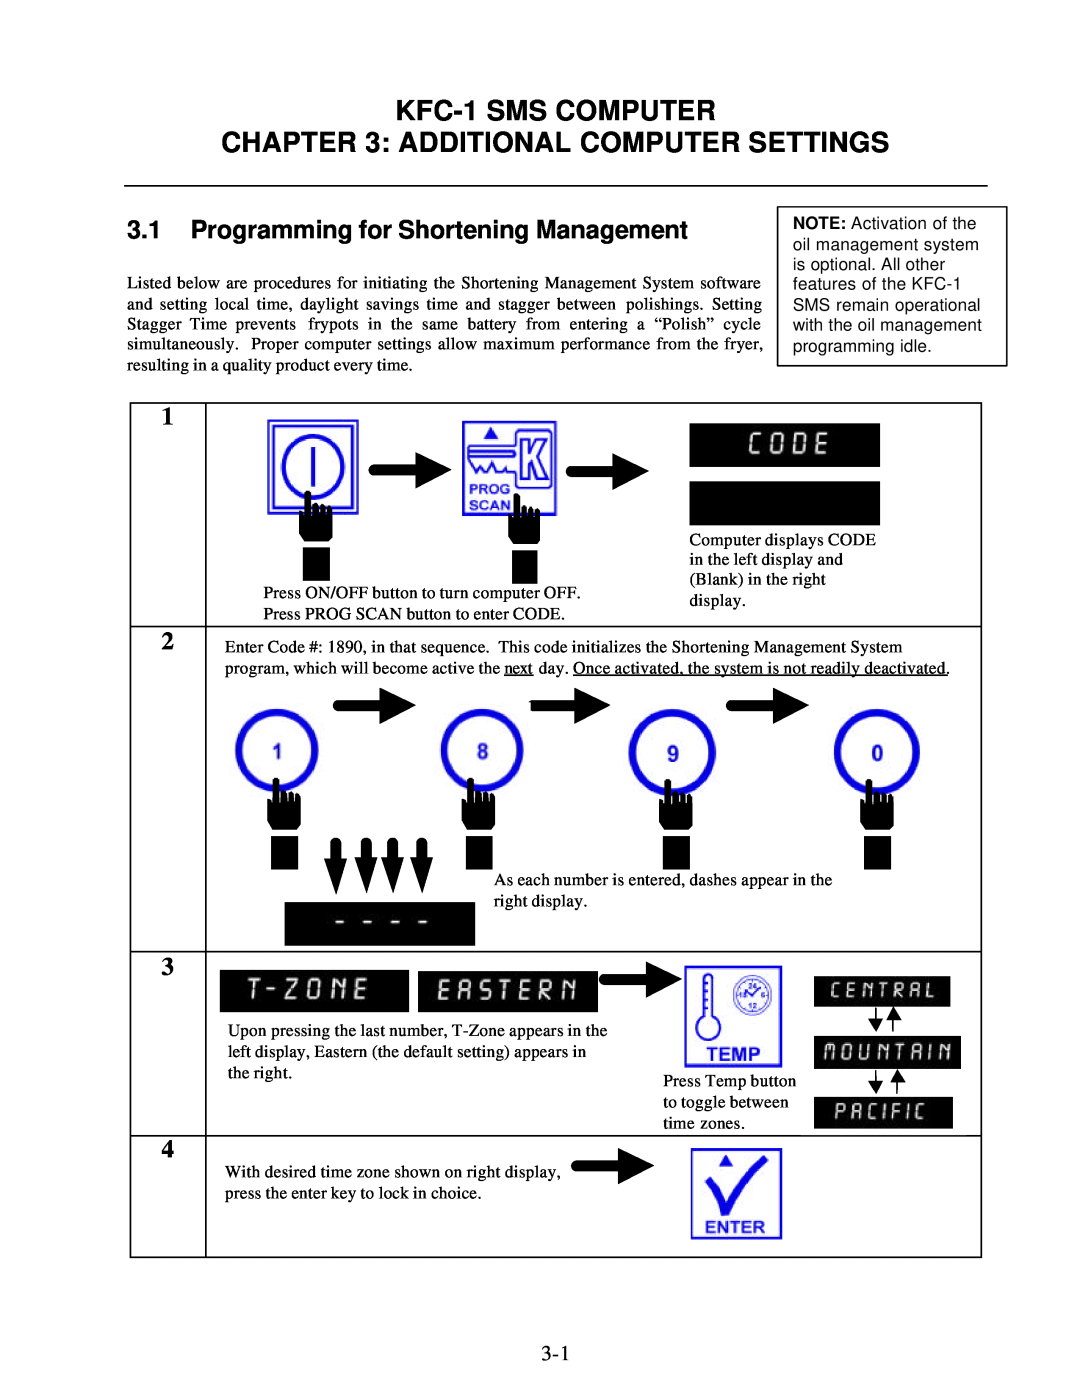 Frymaster KFC-1 SMS manual Additional Computer Settings, 3.1Programming for Shortening Management, KFC-1SMS COMPUTER 